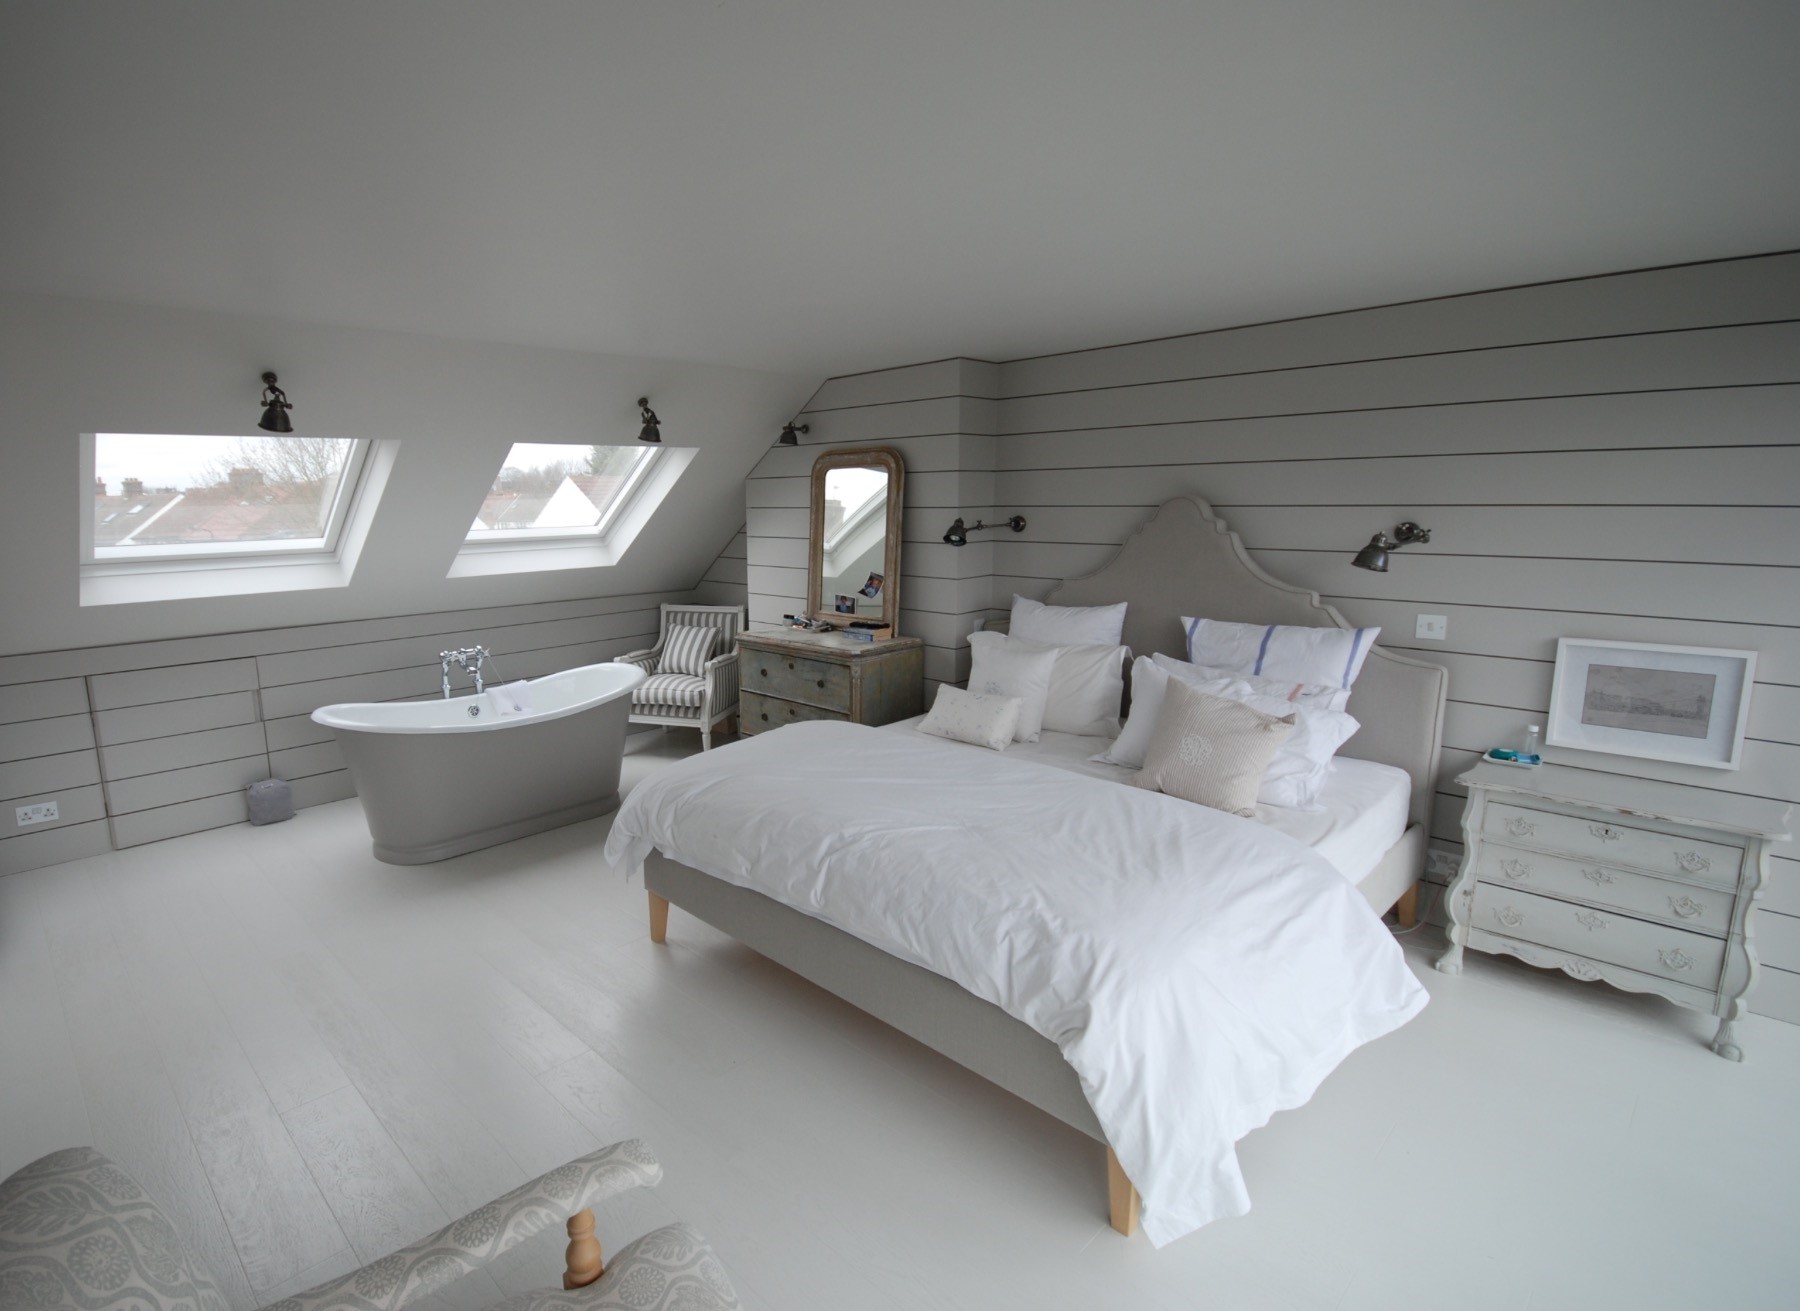 A minimalistic attic bedroom with bathroom